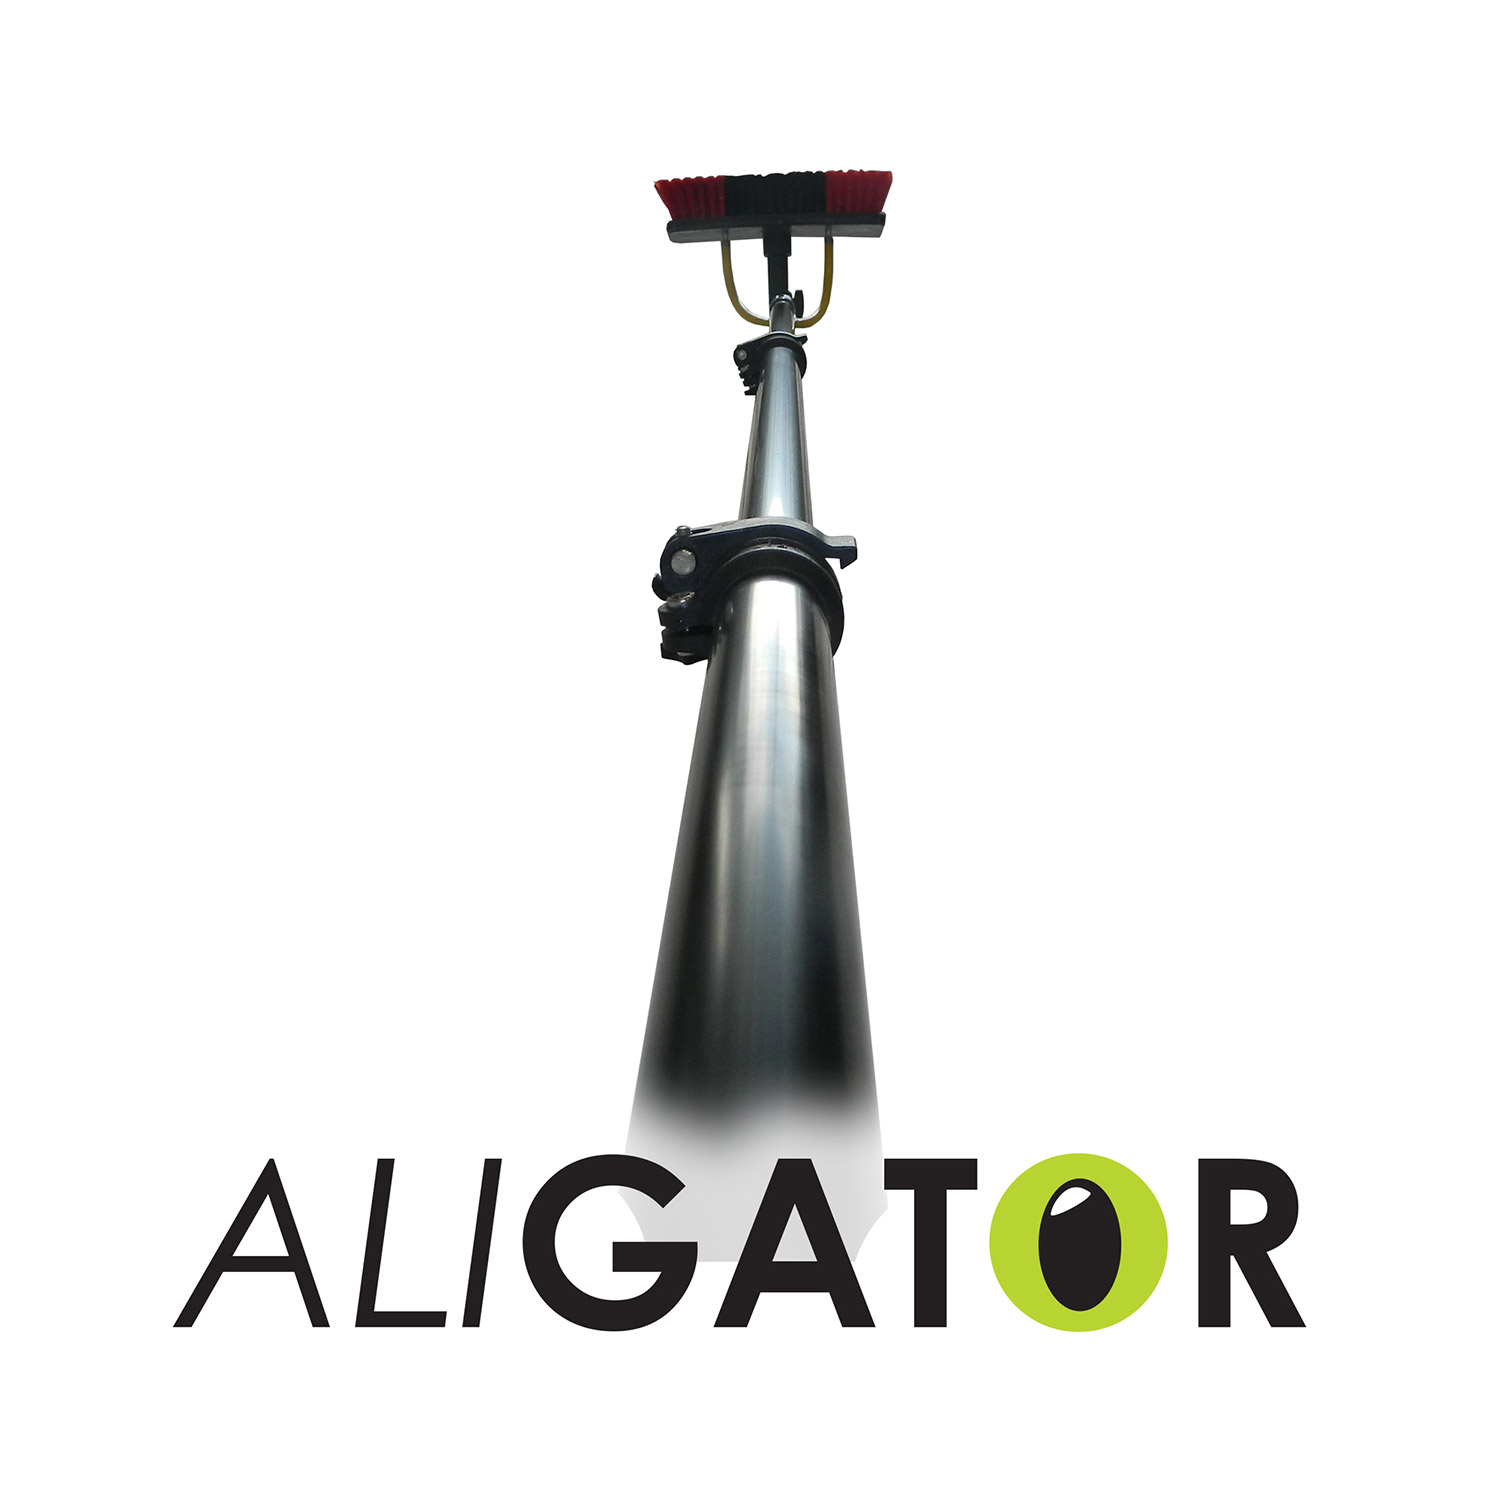 water fed pole, window cleaning pole, window cleaning brush, alligator pole, alloy pole